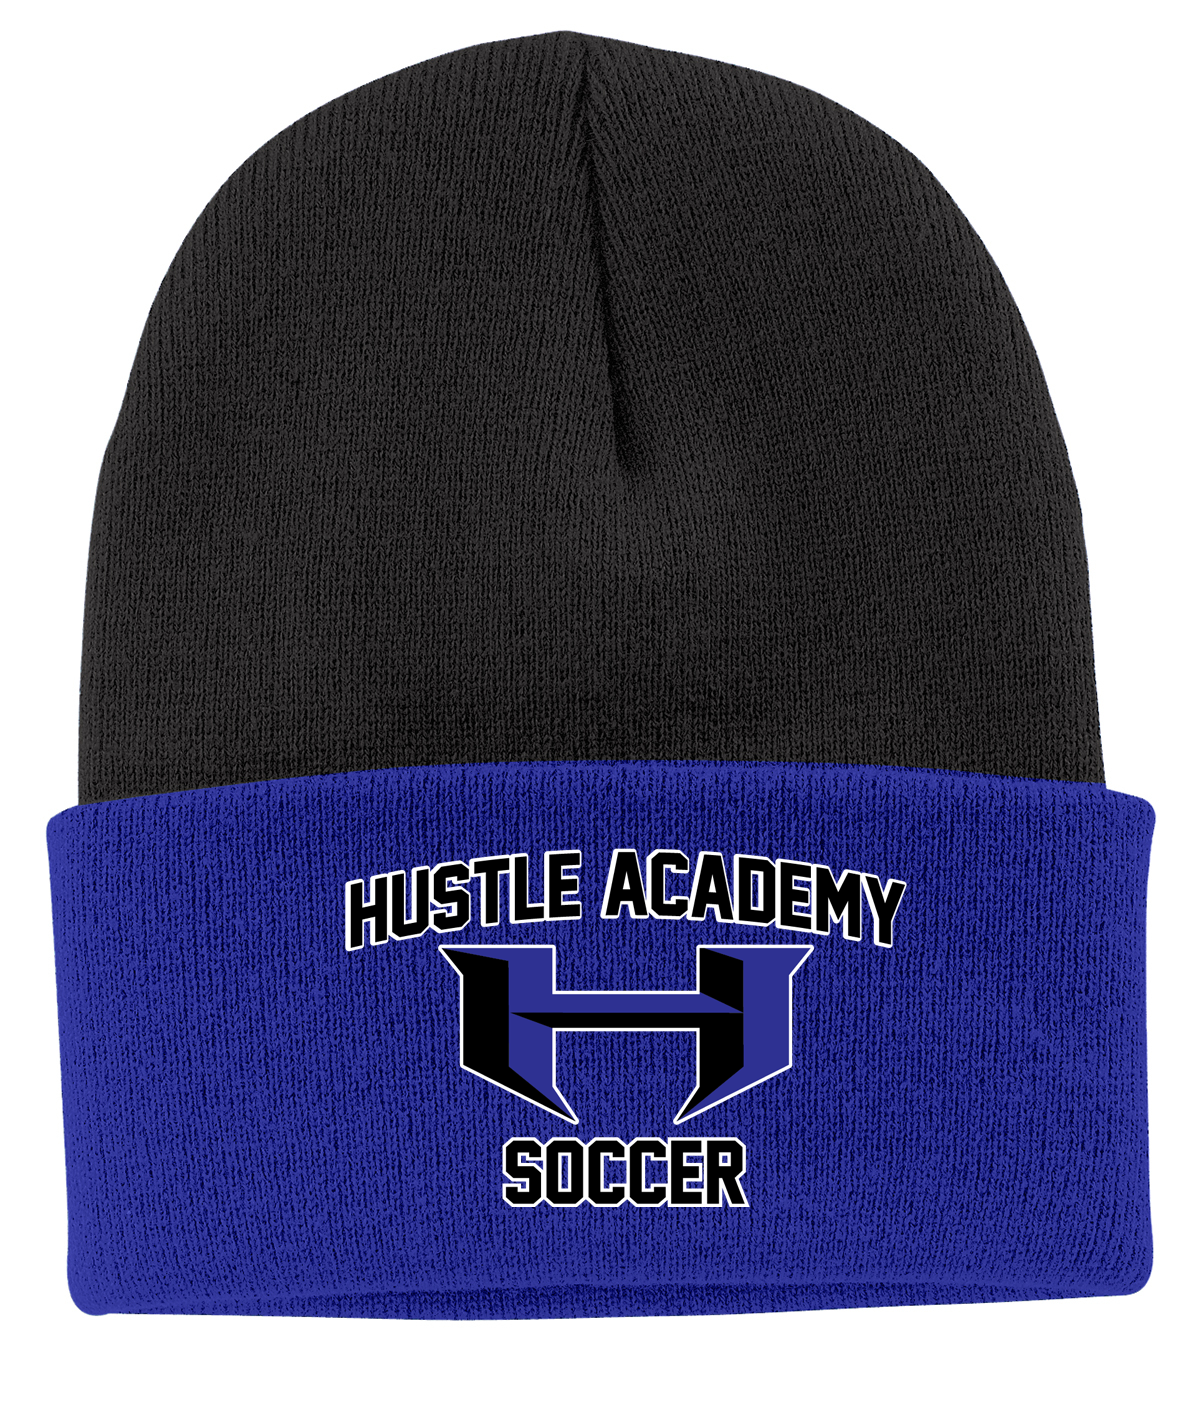 Hustle Academy Soccer Knit Beanie